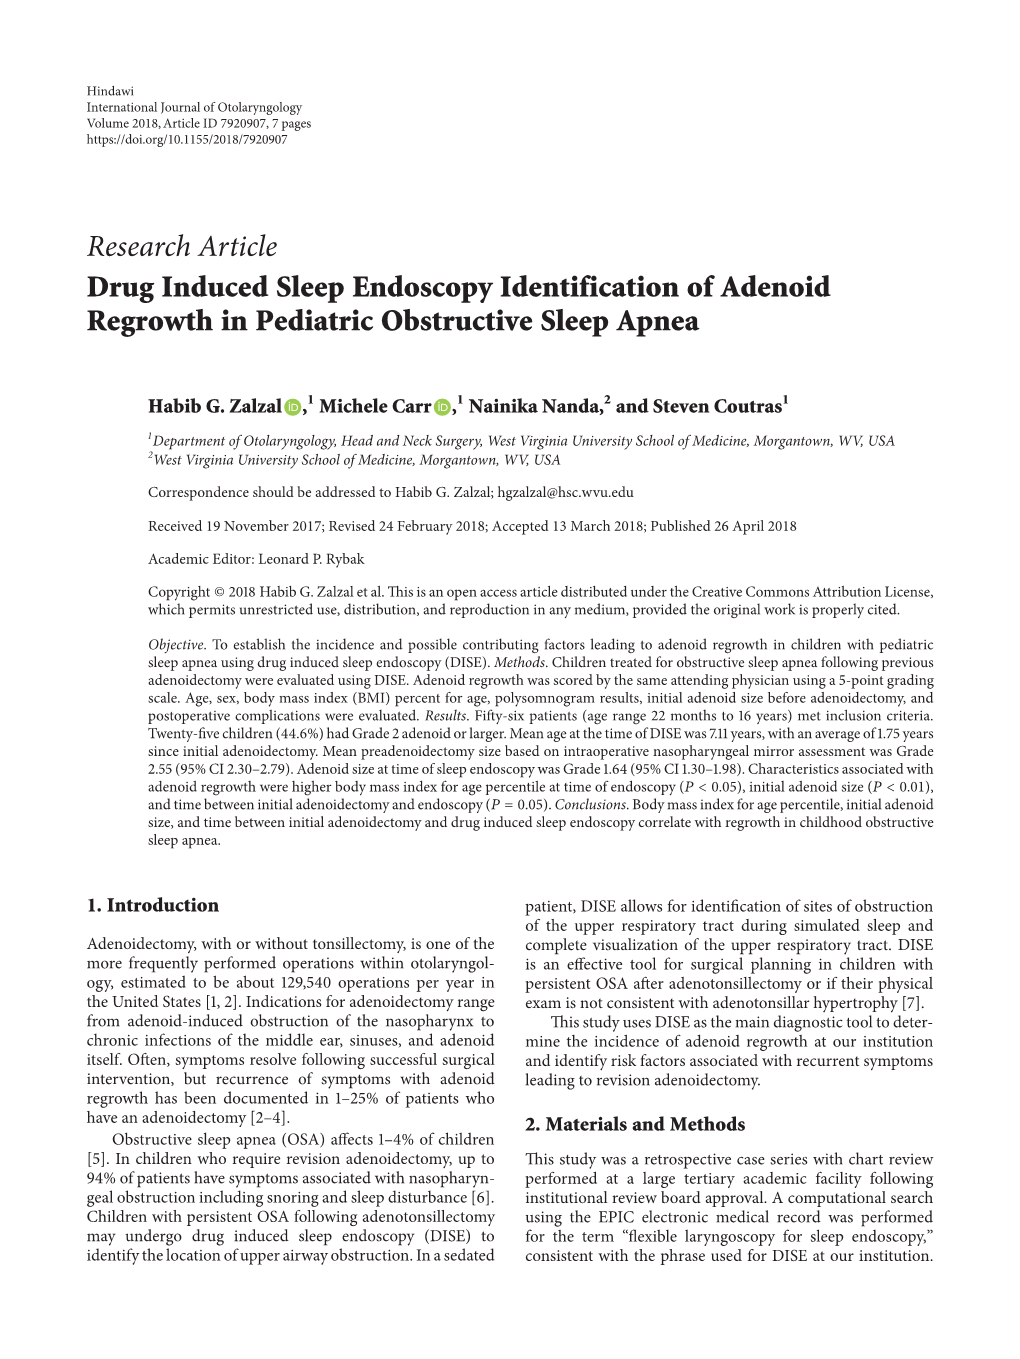 Research Article Drug Induced Sleep Endoscopy Identification of Adenoid Regrowth in Pediatric Obstructive Sleep Apnea